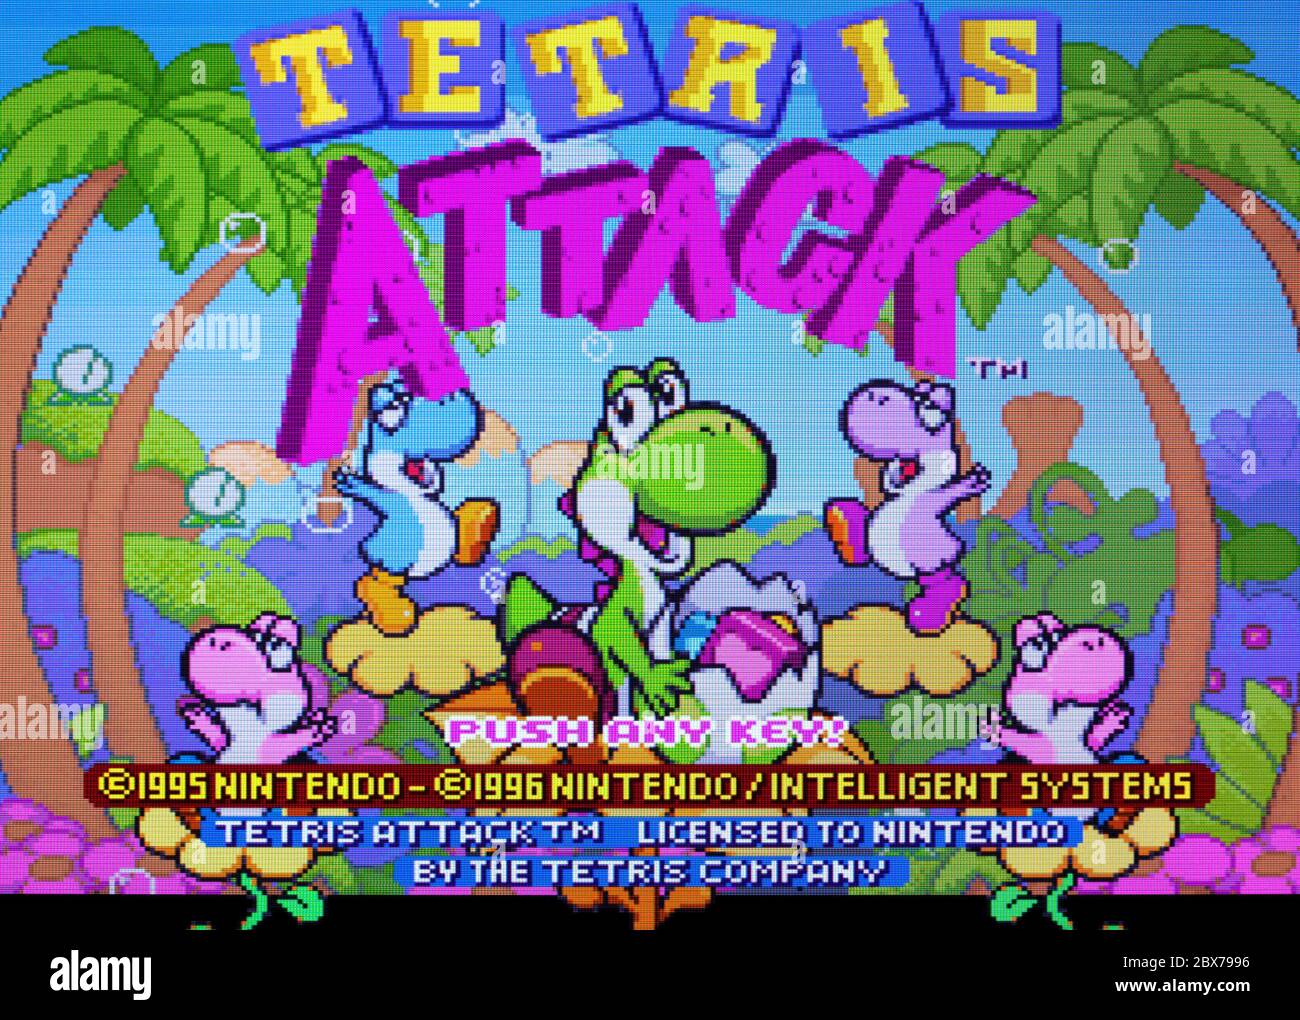 Tetris Attack - SNES Super Nintendo - Editorial use only Stock Photo - Alamy